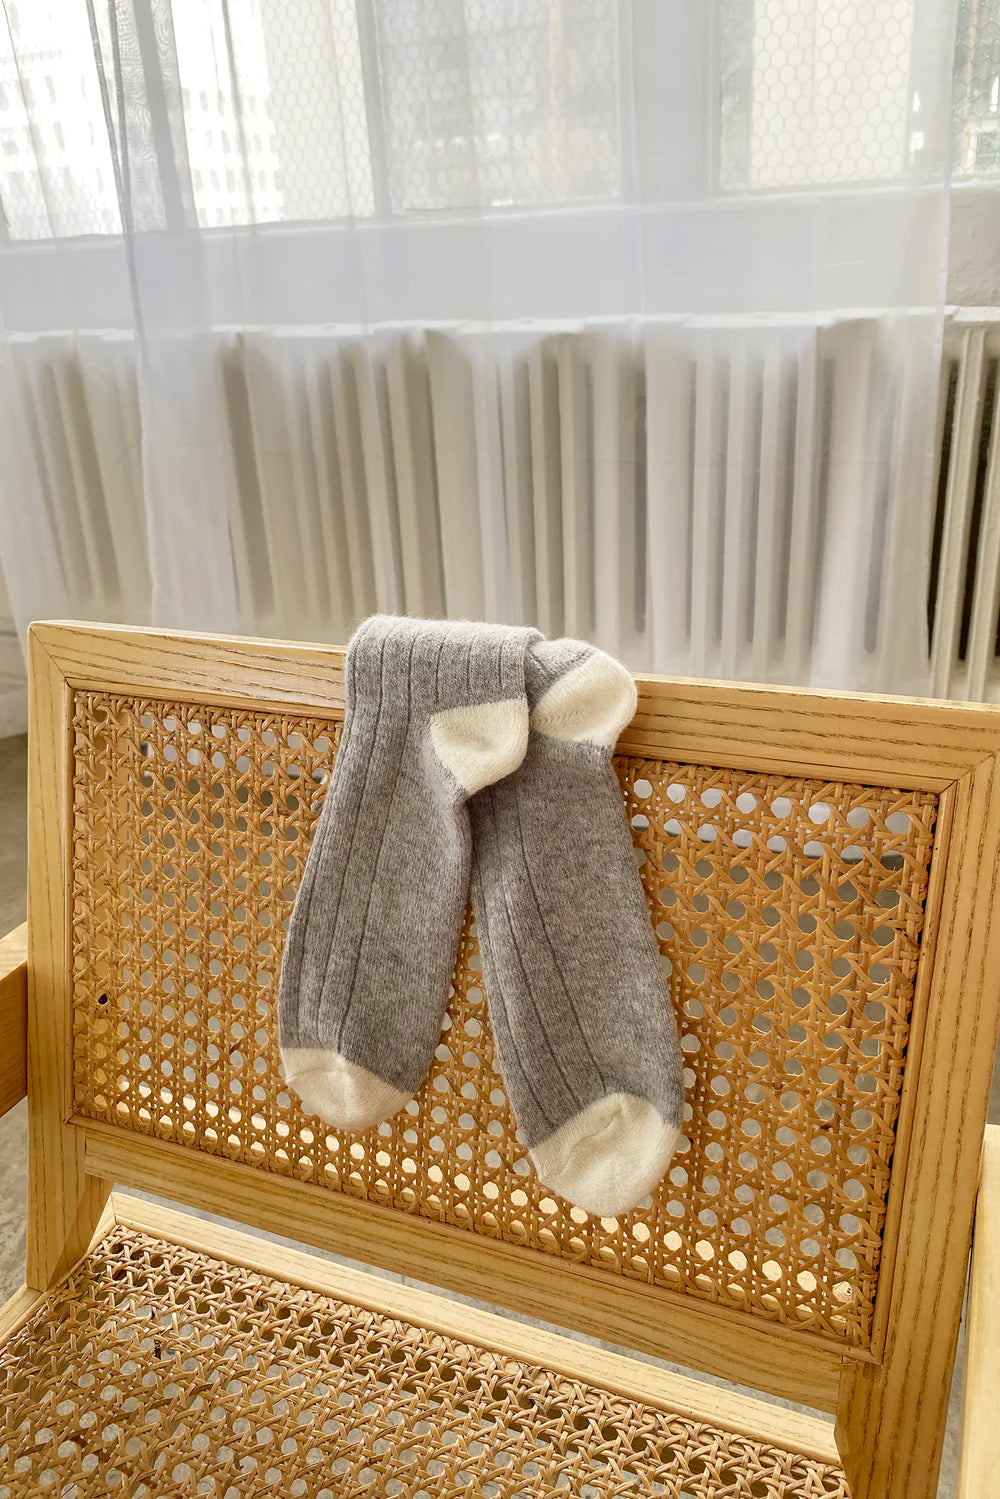 ponožky Classic Cashmere grey melange extended